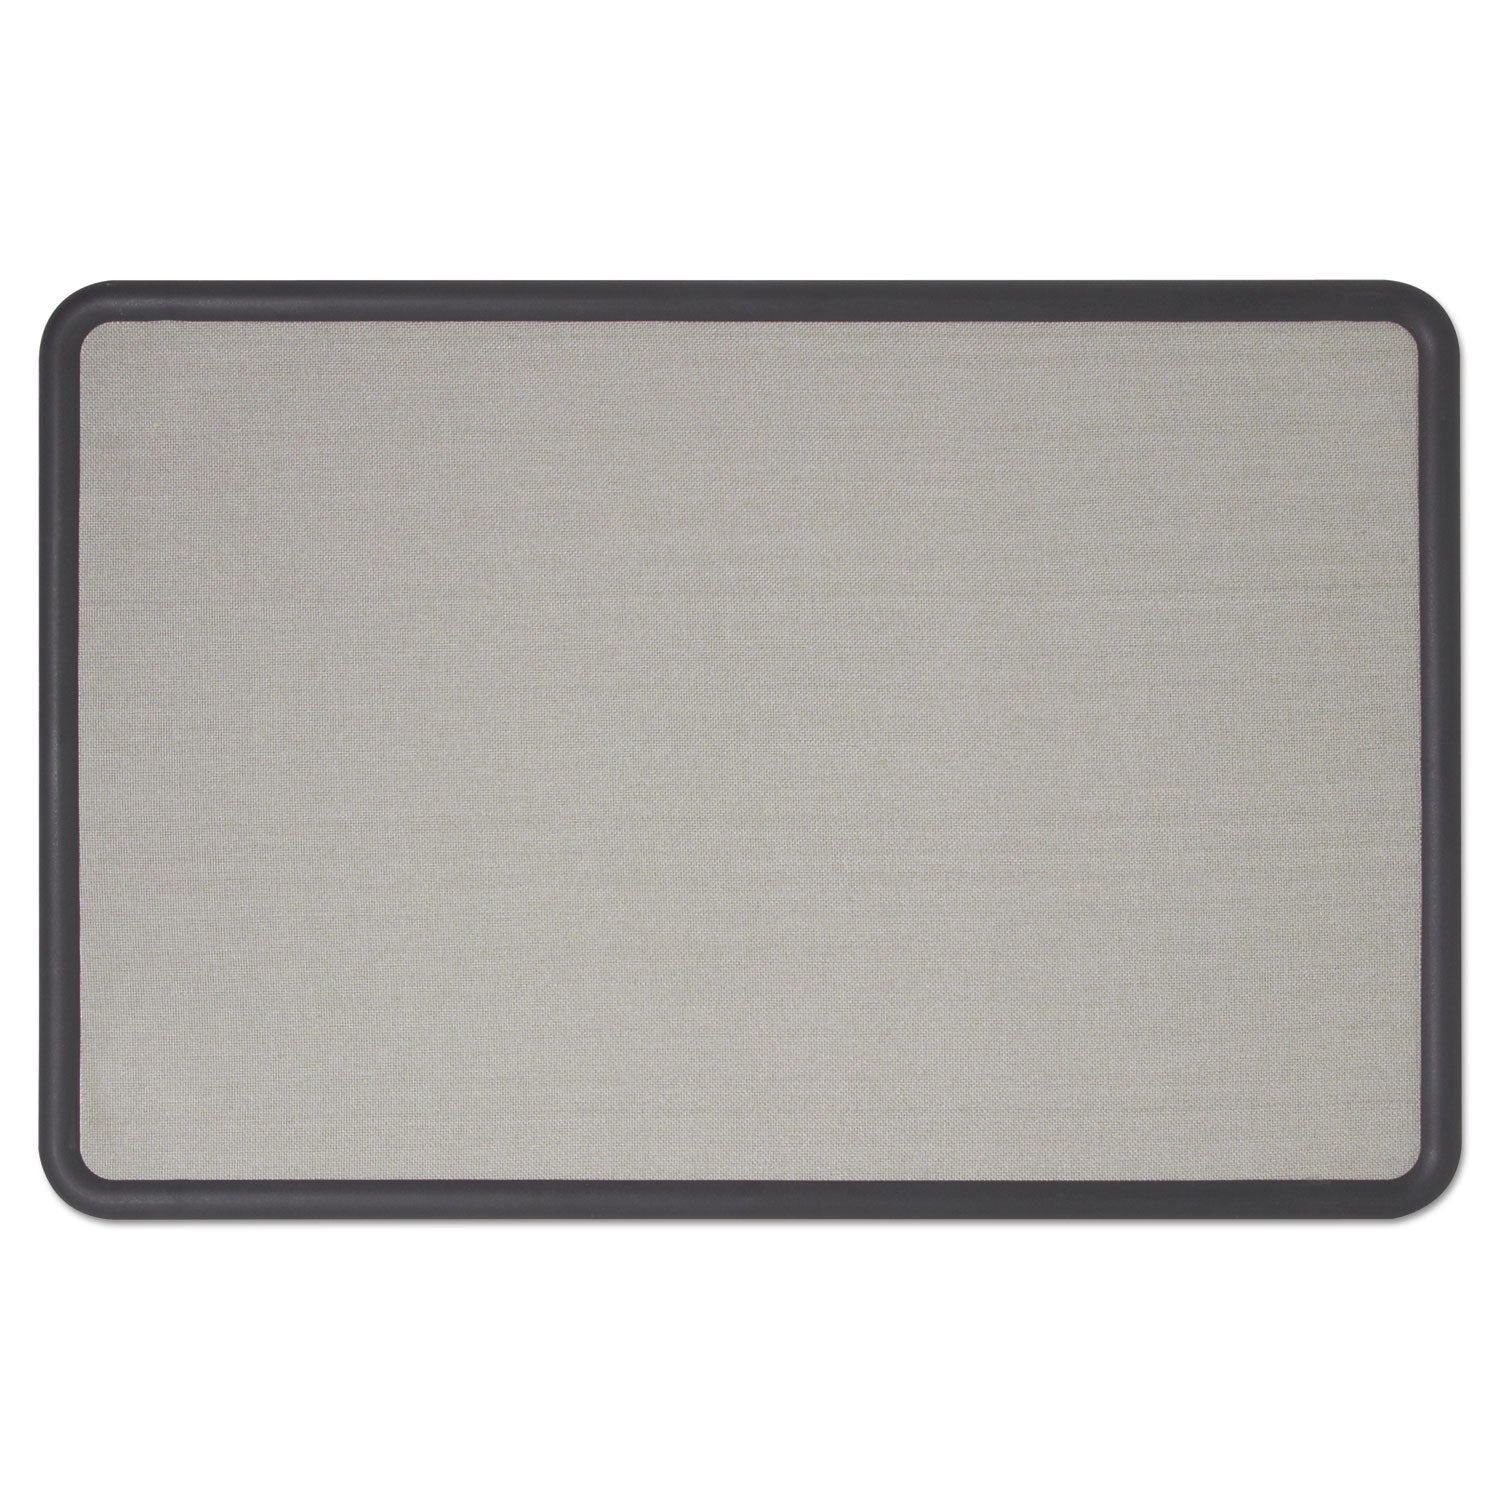 Contour Fabric Bulletin Board, 36 x 24, Gray Surface, Black Plastic Frame - 